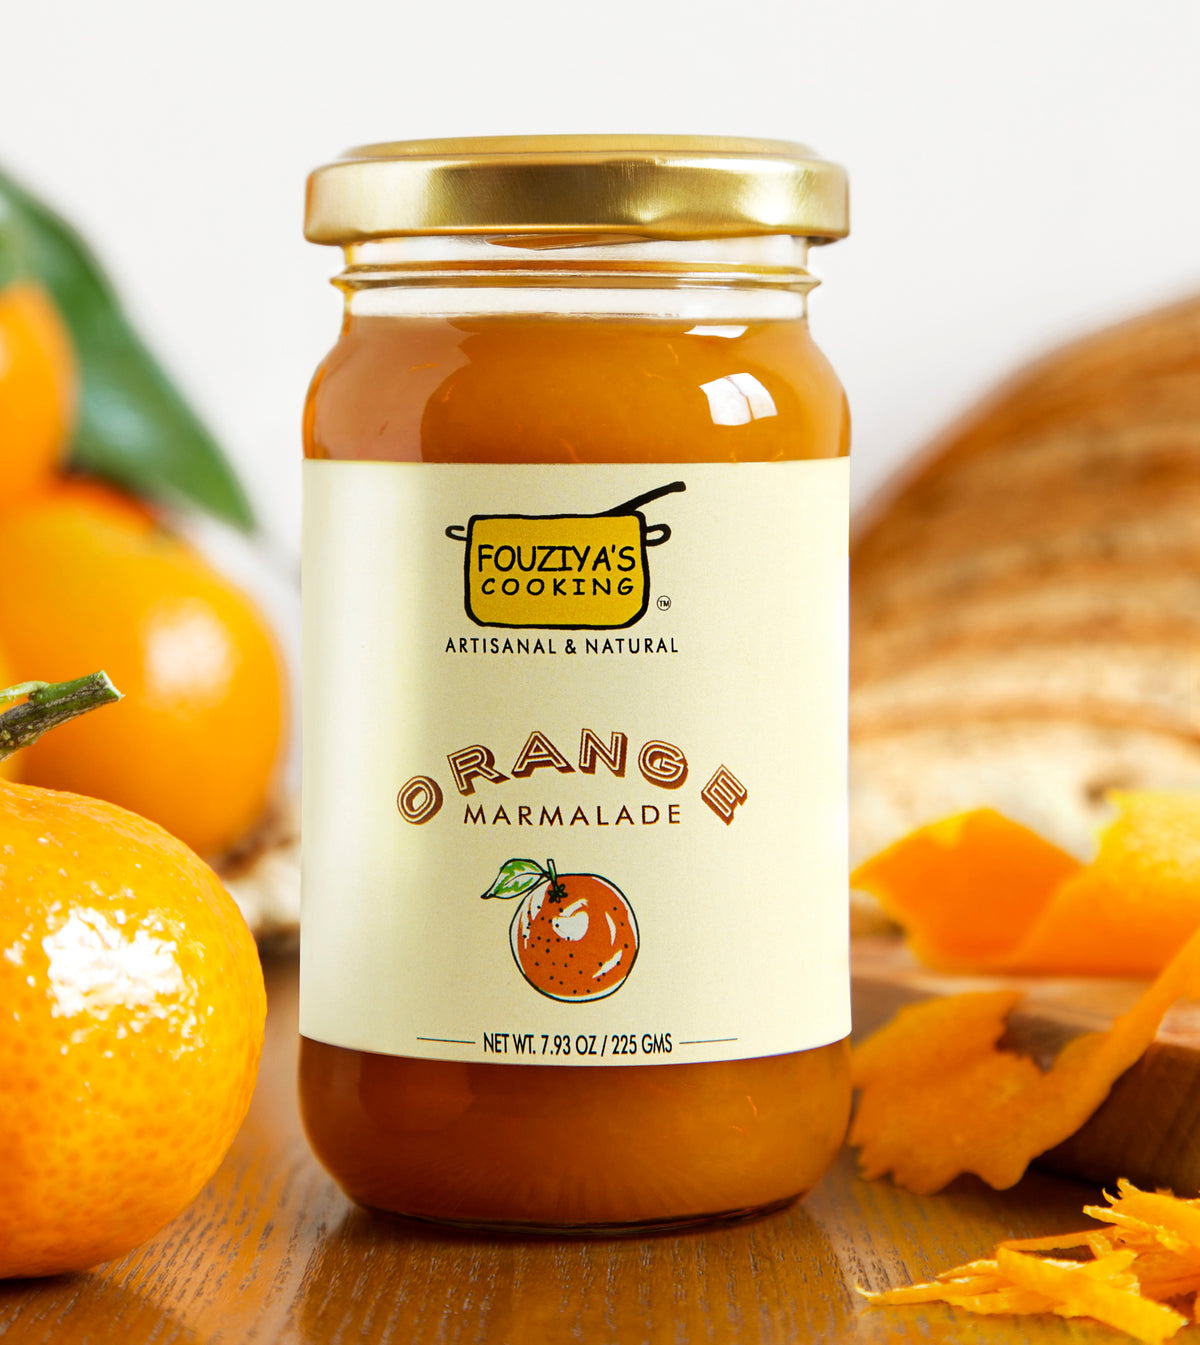 Fouziya's Orange marmalade